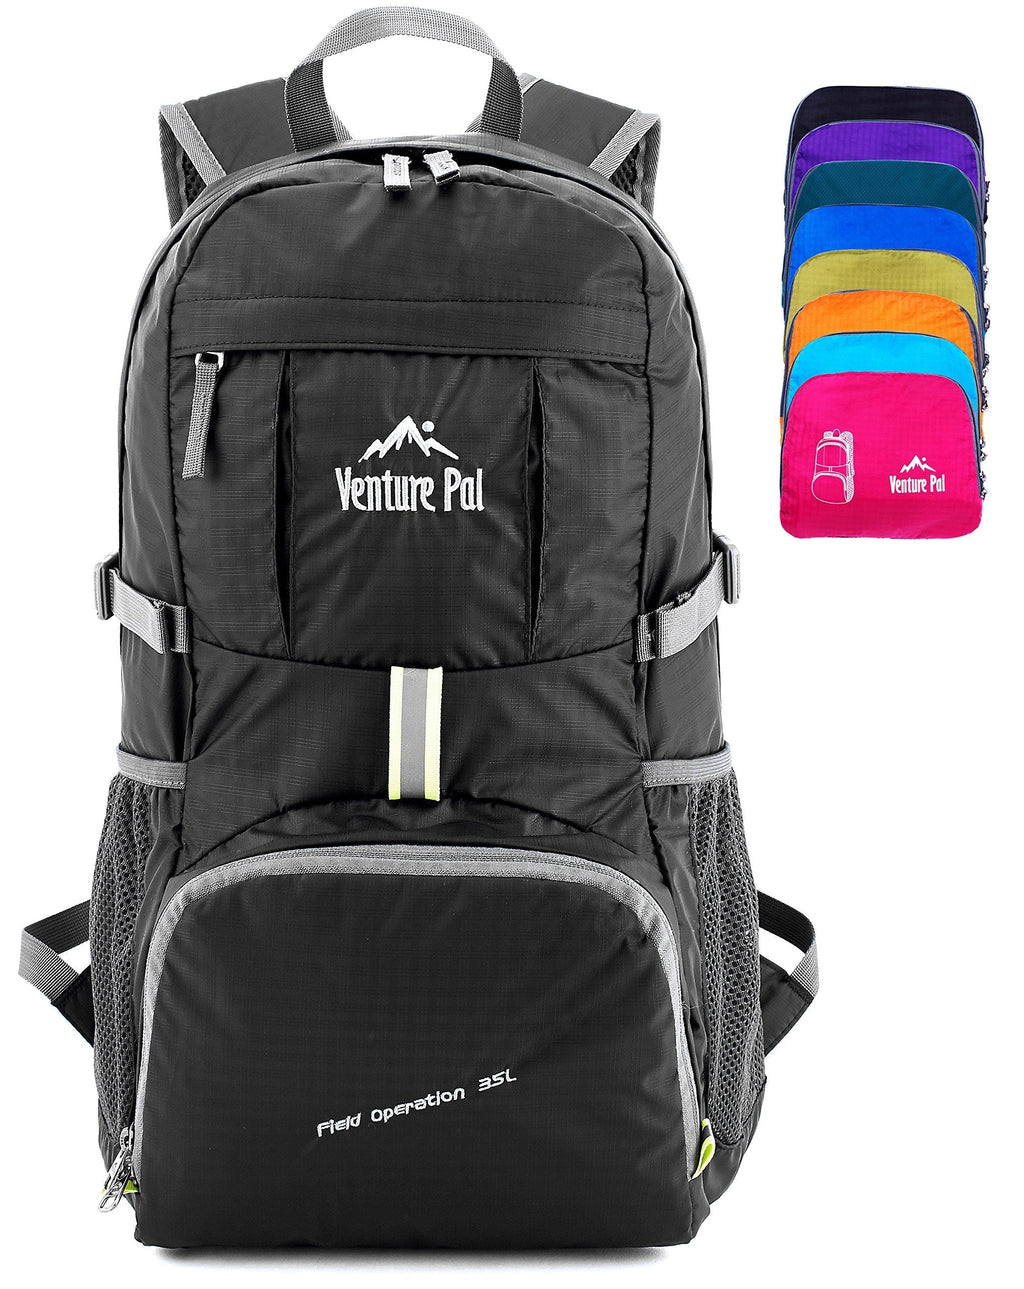 Venture Pal Lightweight Packable Durable Travel Hiking Backpack Daypack 01. Black - BeesActive Australia